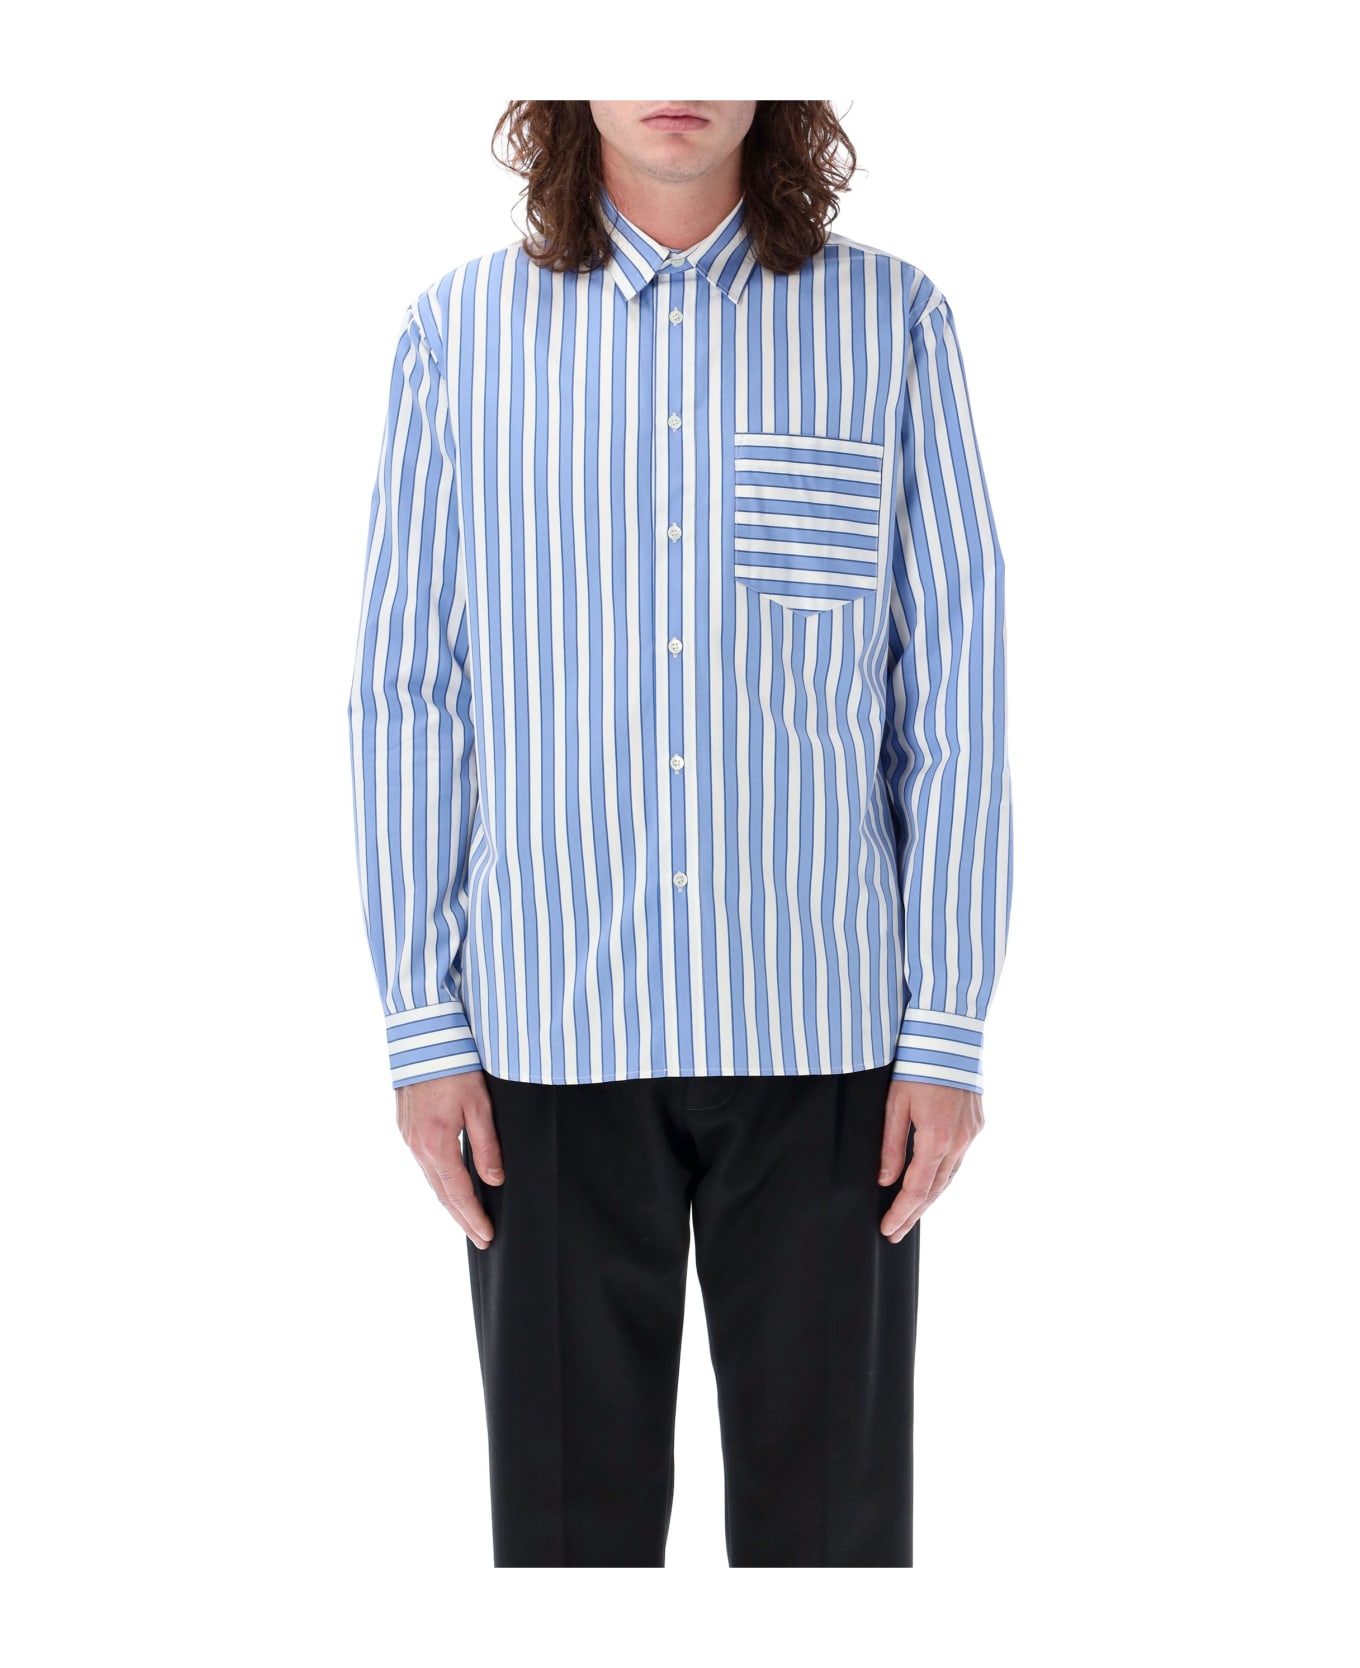 J.W. Anderson Patch Shirt - BLUE WHITE